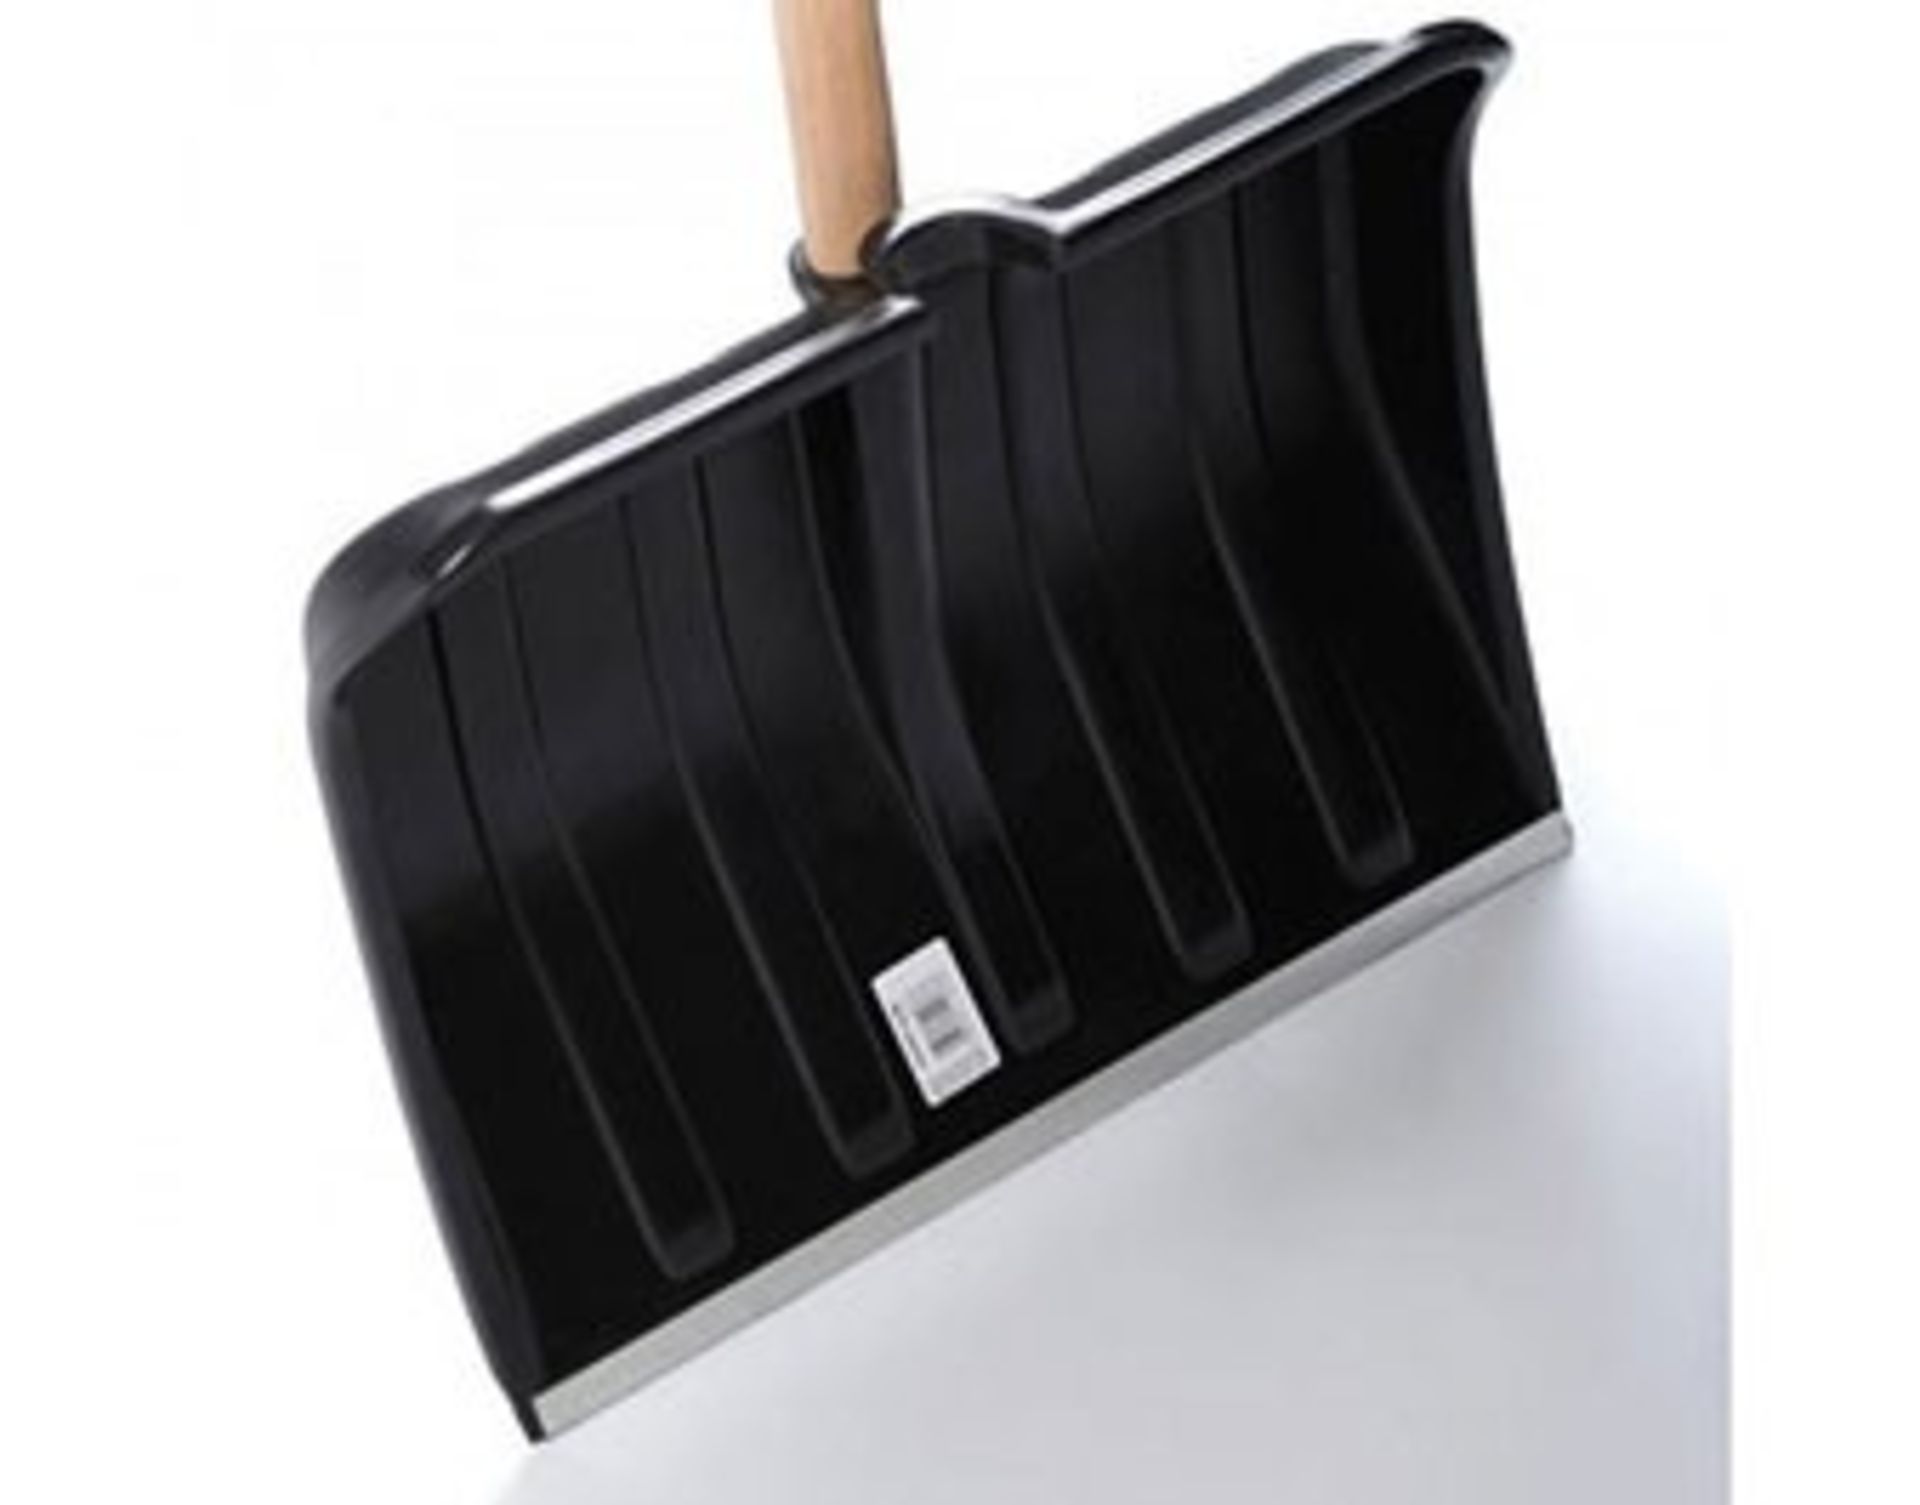 40 x Aleco 47 Black Multi Purpose Shovel with Metal Edge - Image 2 of 2